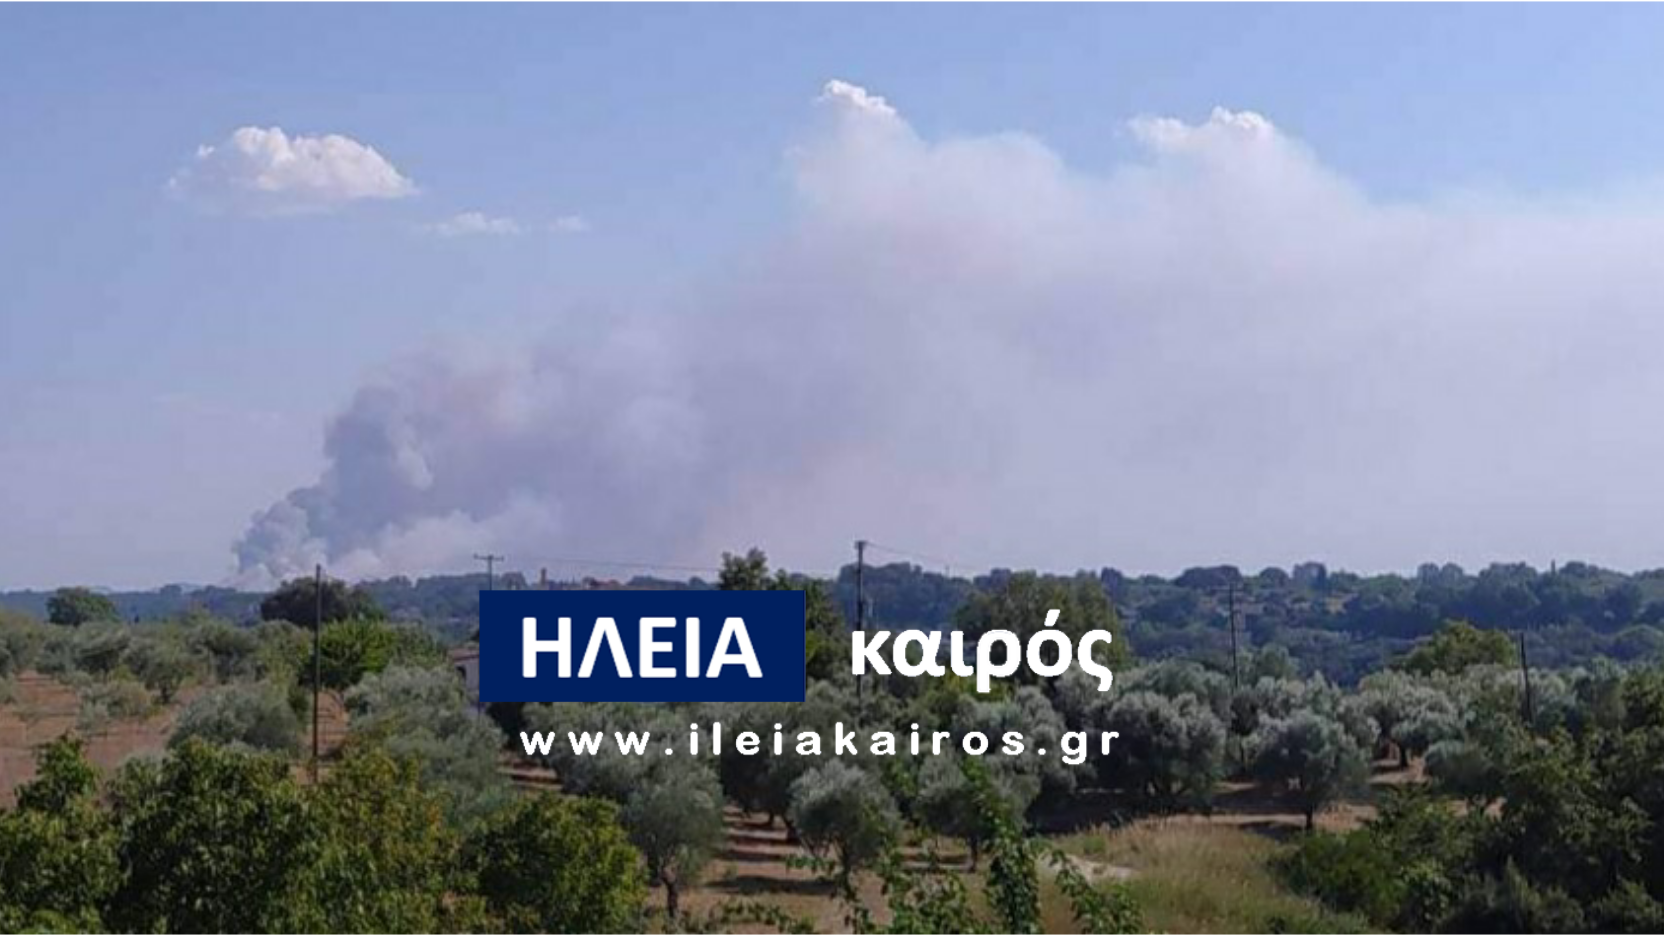 You are currently viewing Δ.Ήλιδας: Πυρκαγιά στην περιοχή Κολοκυθάς στο Φράγμα Πηνειού